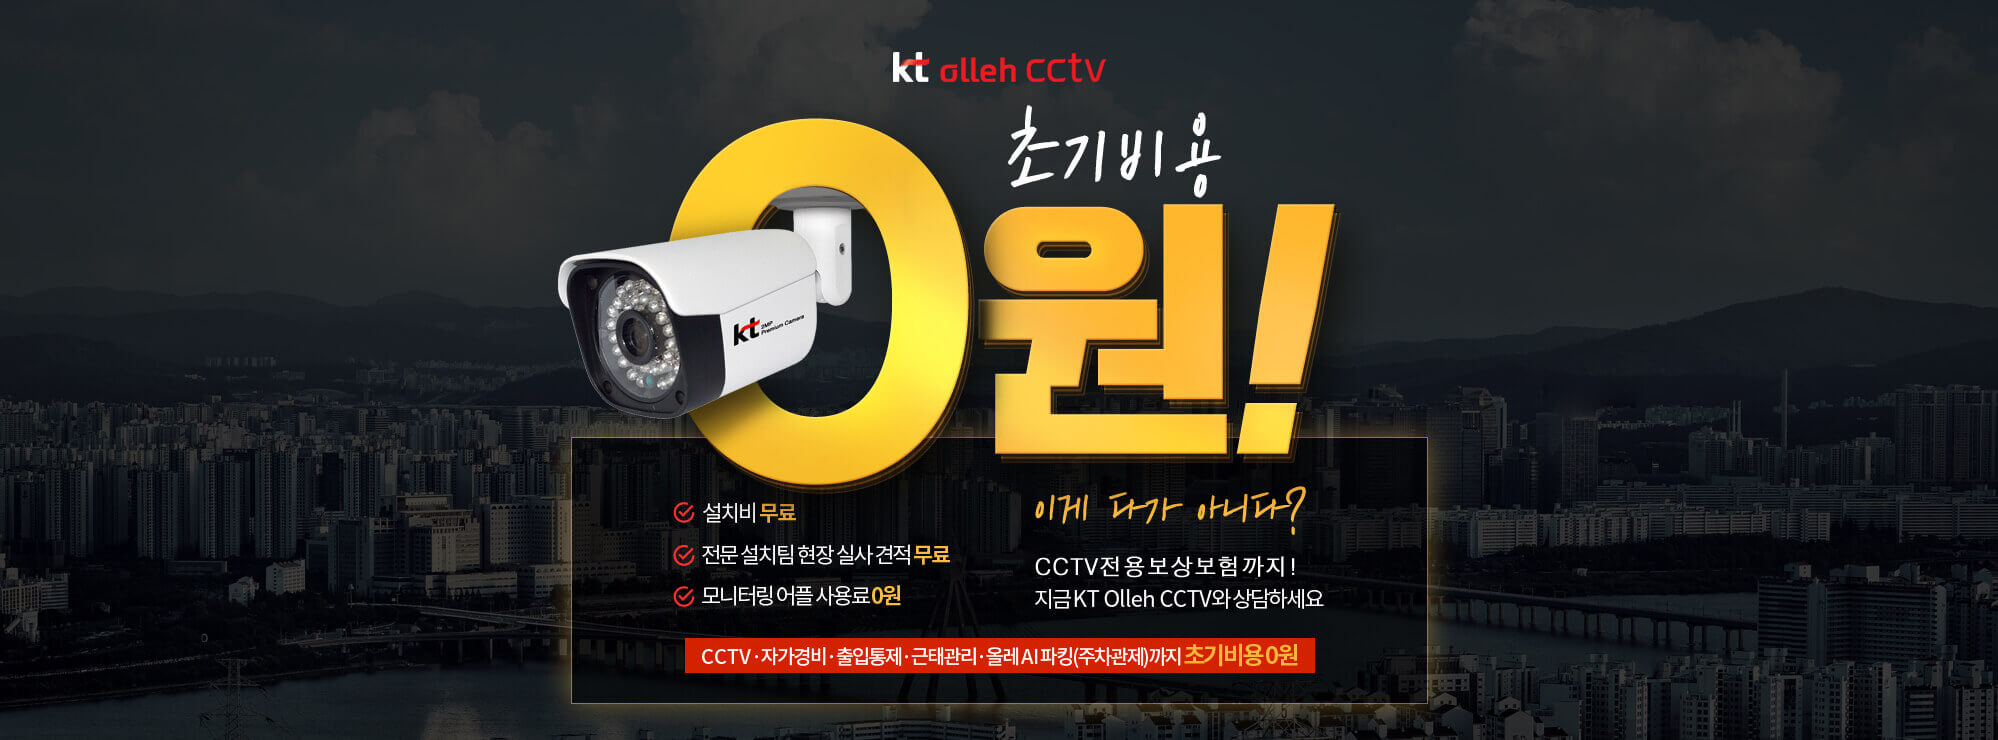 KT CCTV